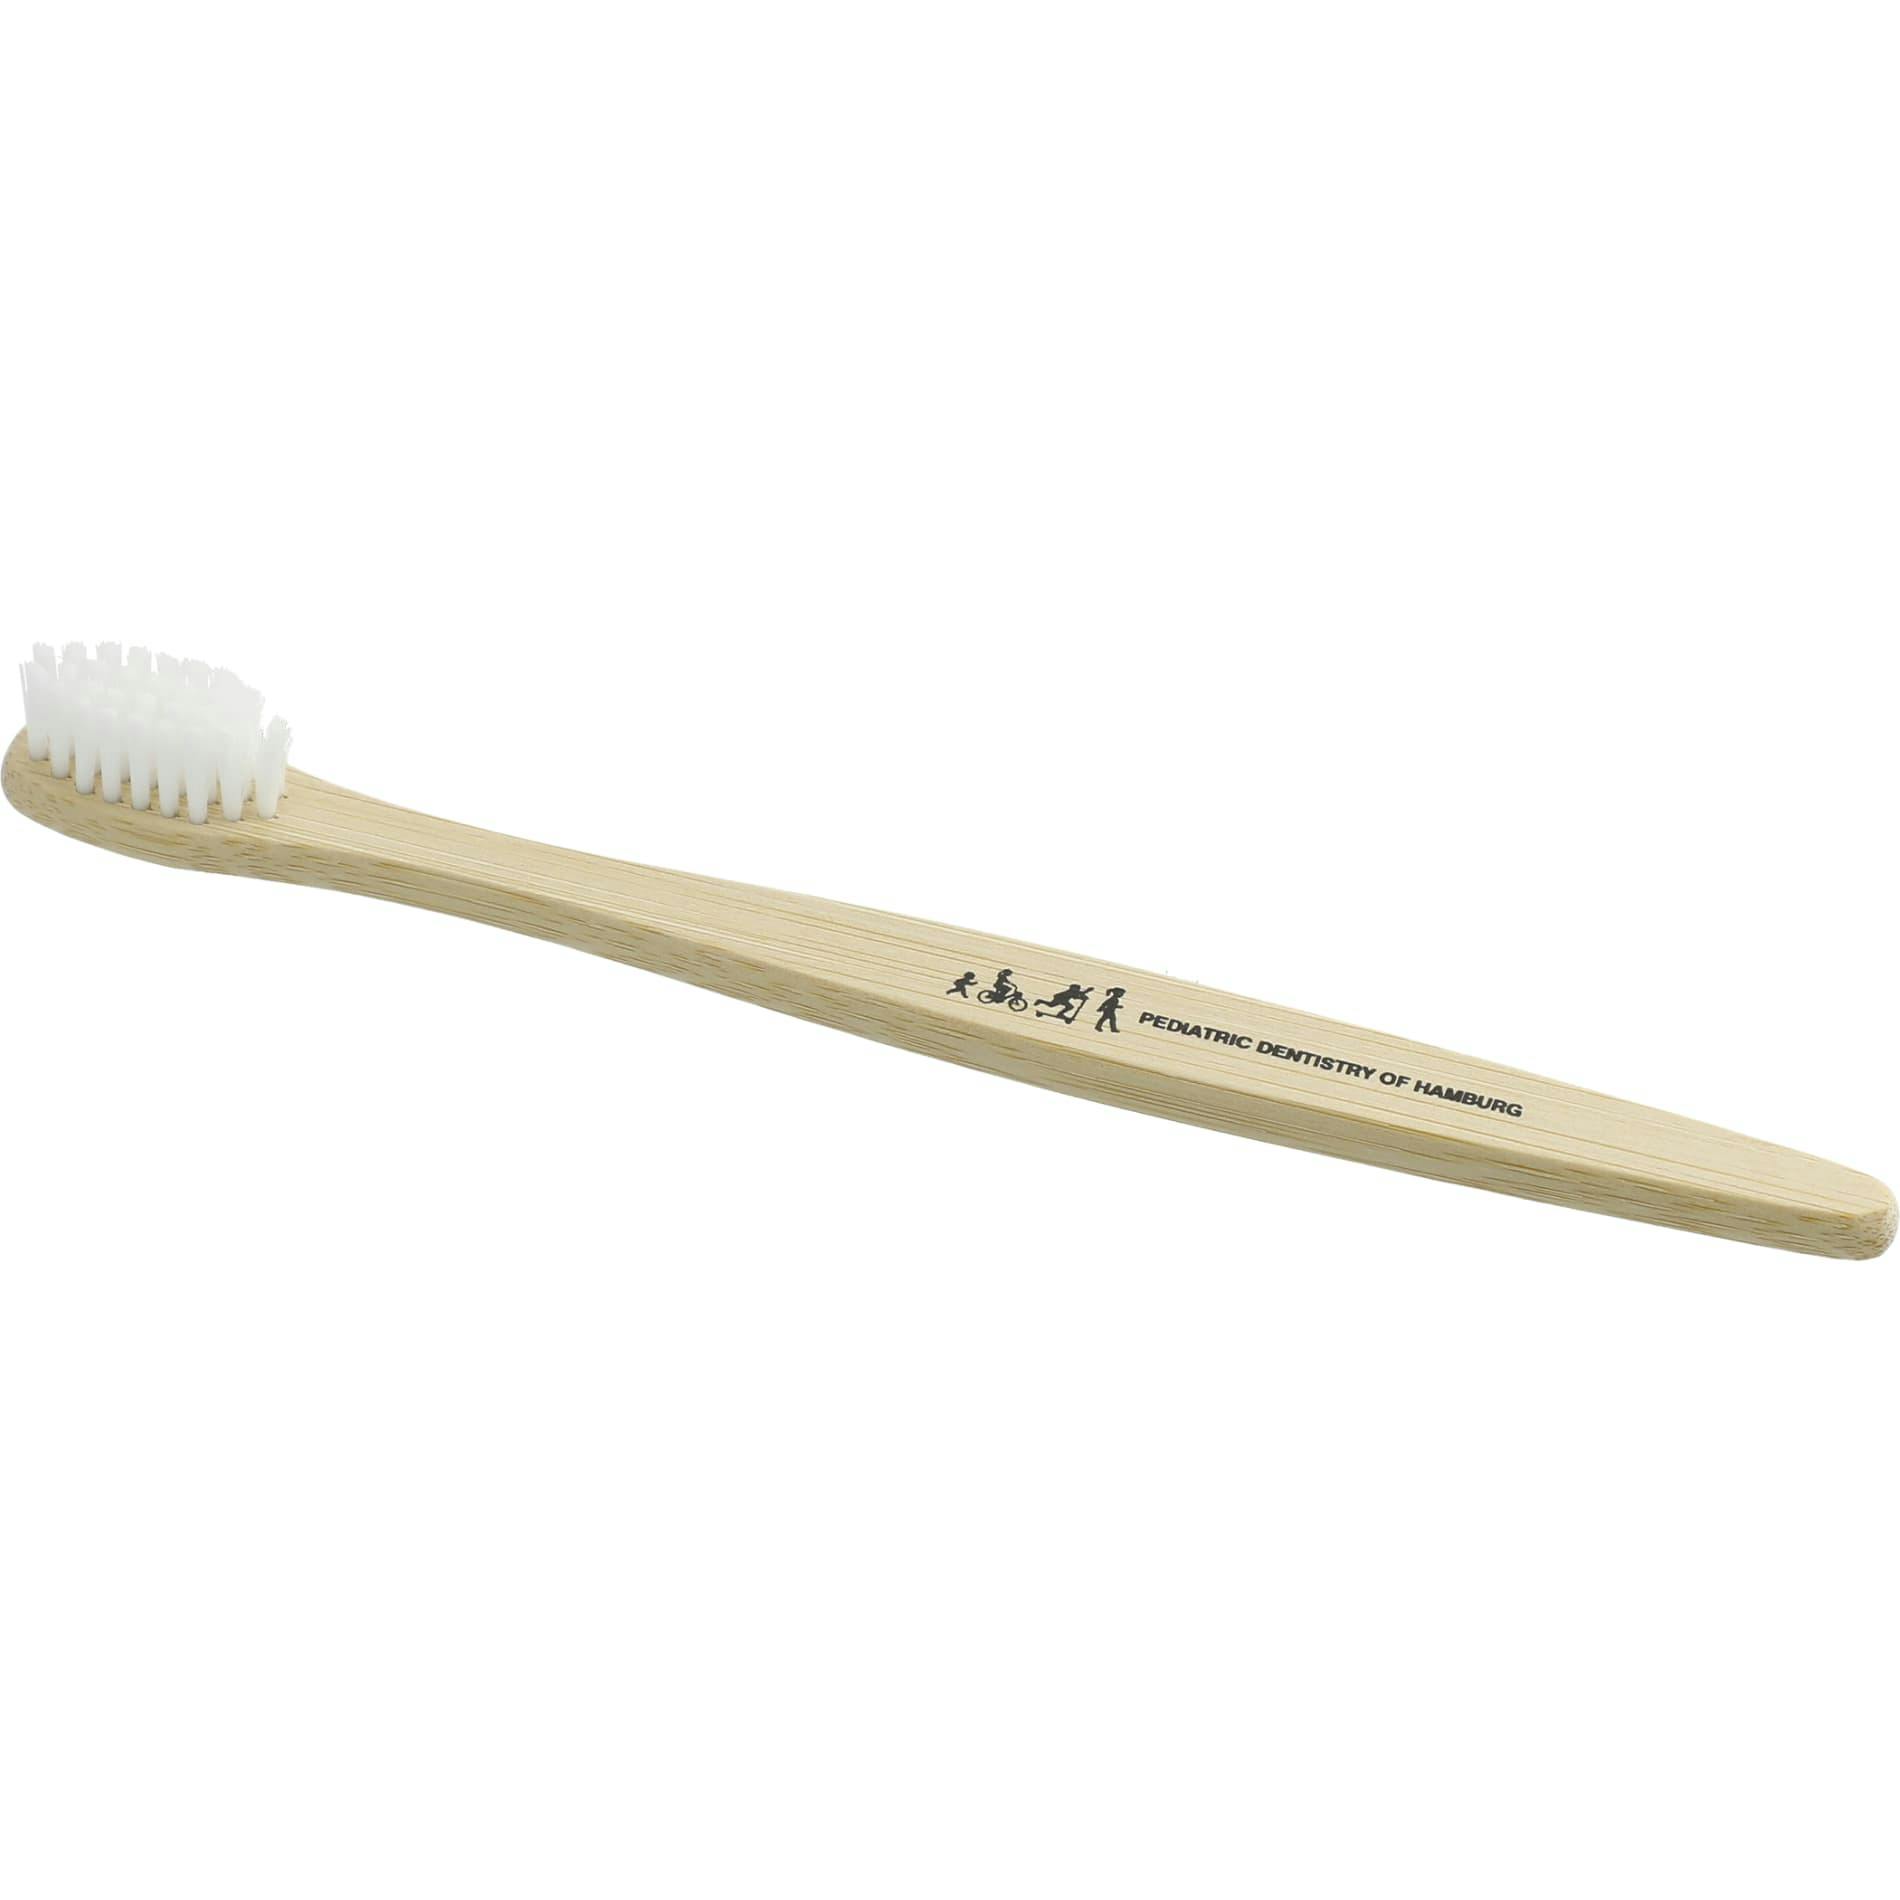 Bamboo Junior Toothbrush - additional Image 1